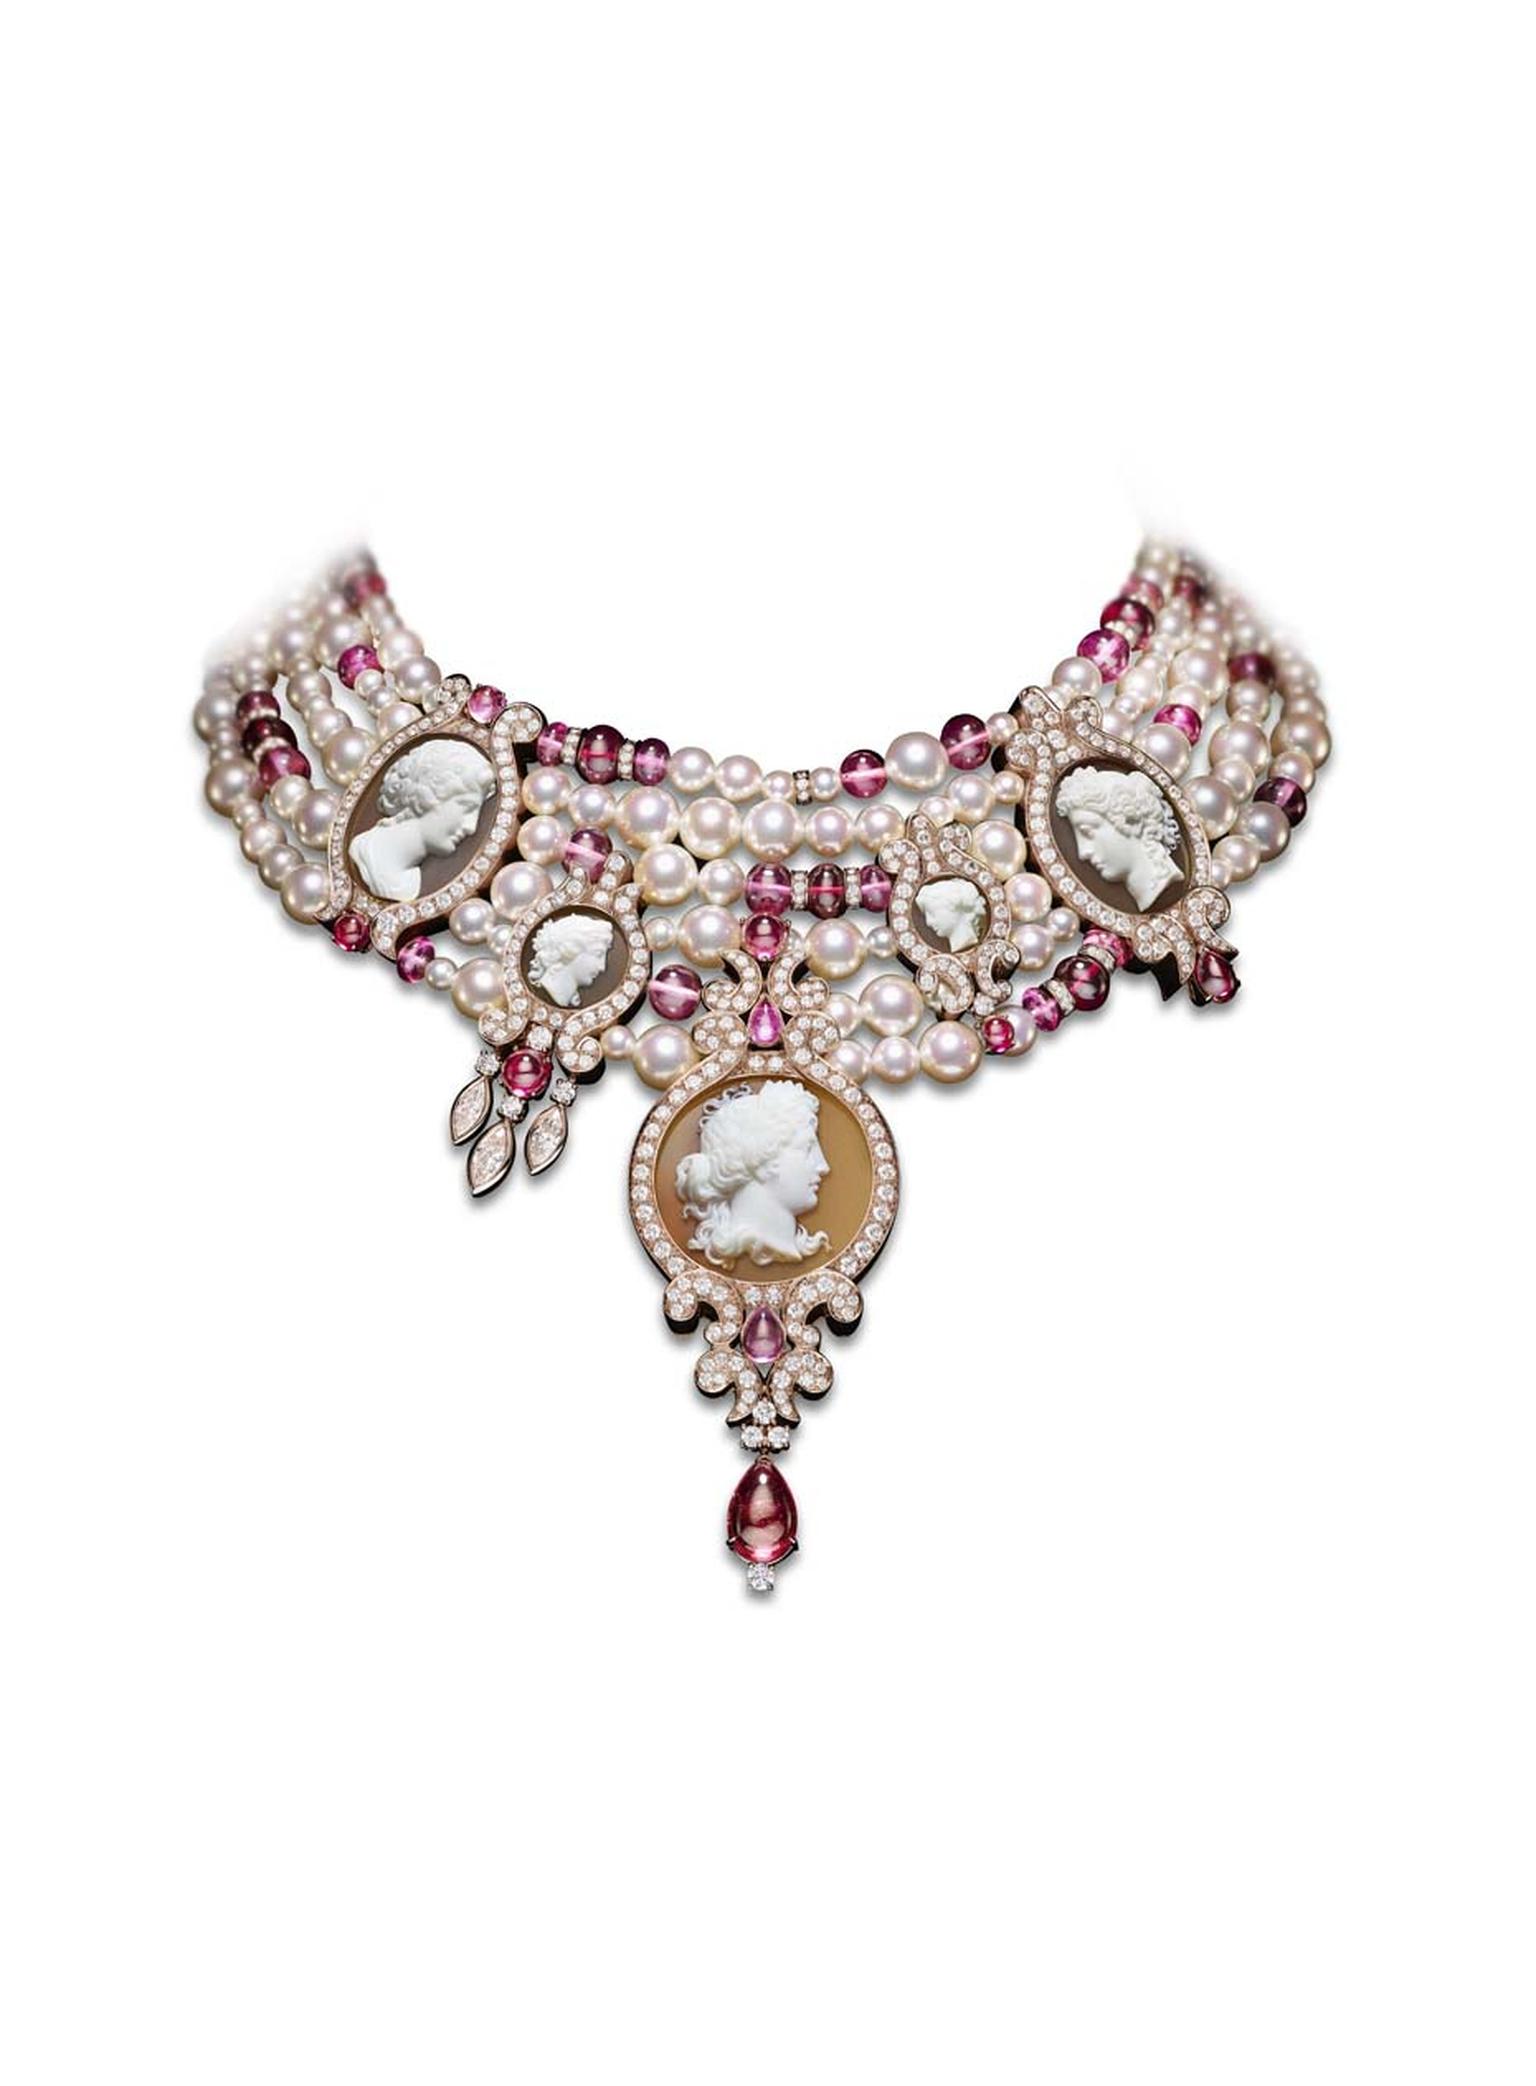 Giampiero Bodino cameo-themed Paolina rose gold necklace featuring diamonds dotted amongst ropes of different-sized Akoya pearls alongside rubellites and pink tourmaline beads. Image by: Laziz Hamani.